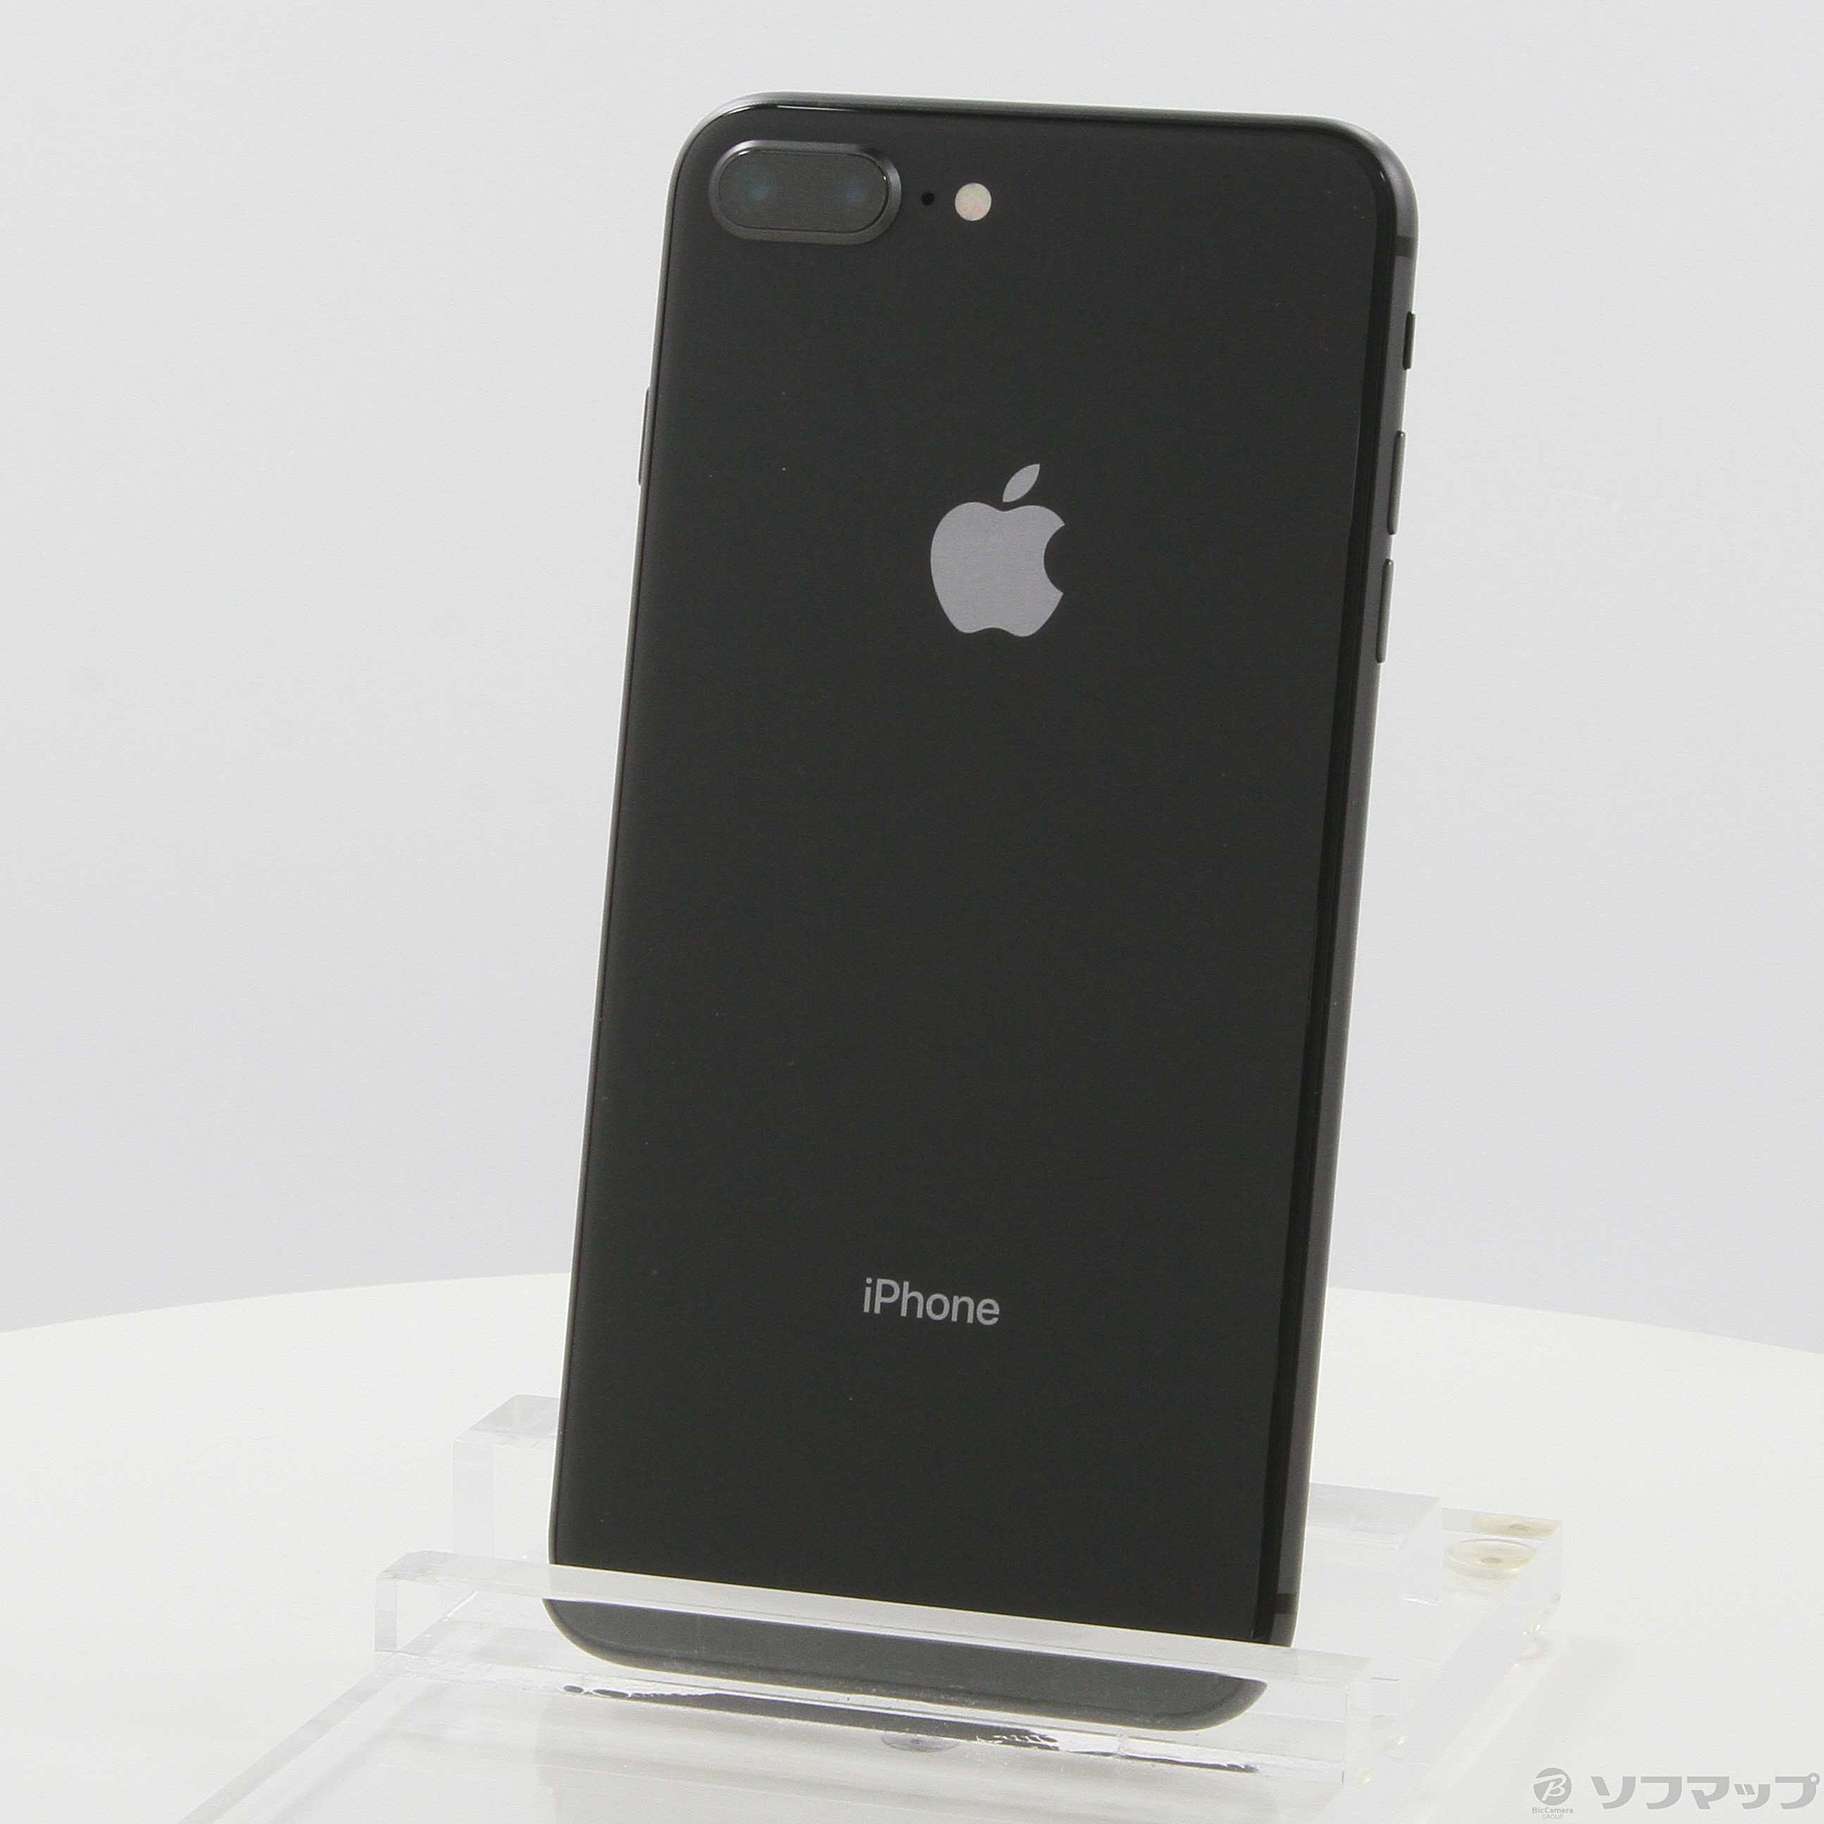 iPhone 8 Plus Space Gray 256 GB SIMフリー - 携帯電話本体